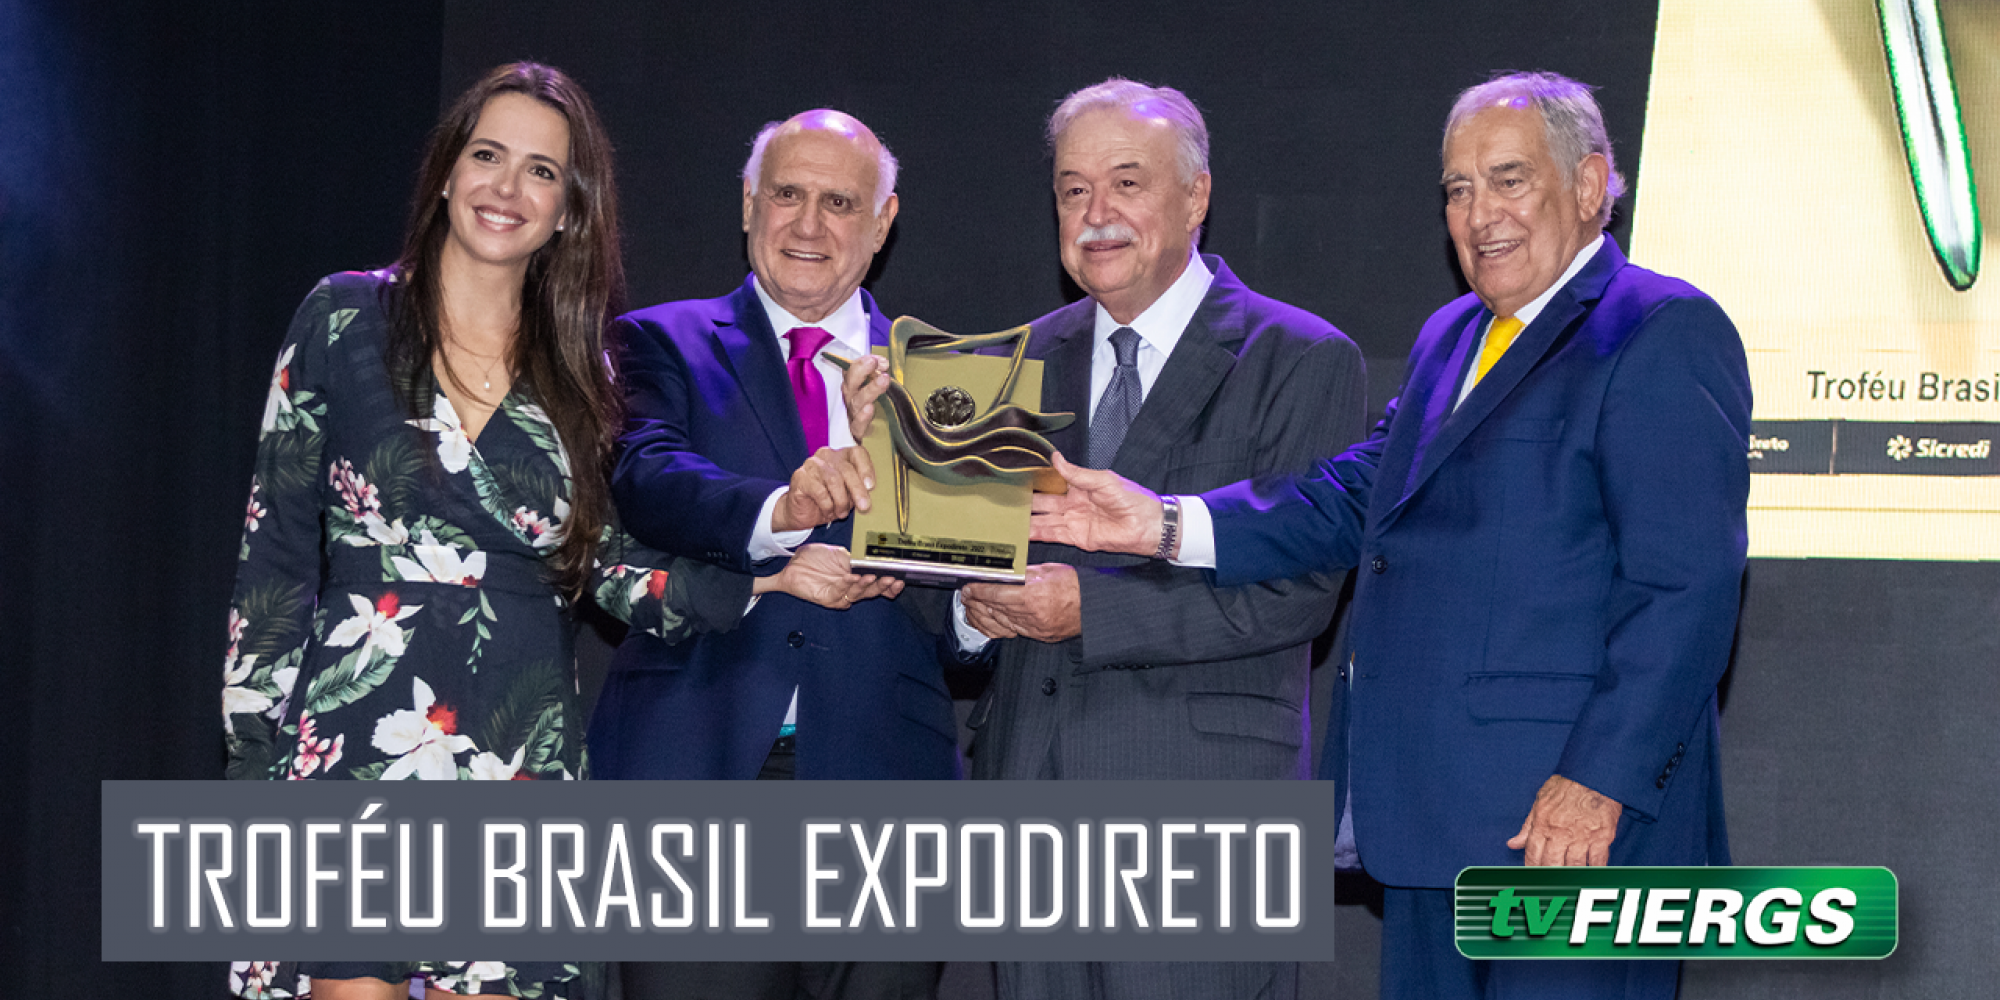 Troféu Brasil Expodireto